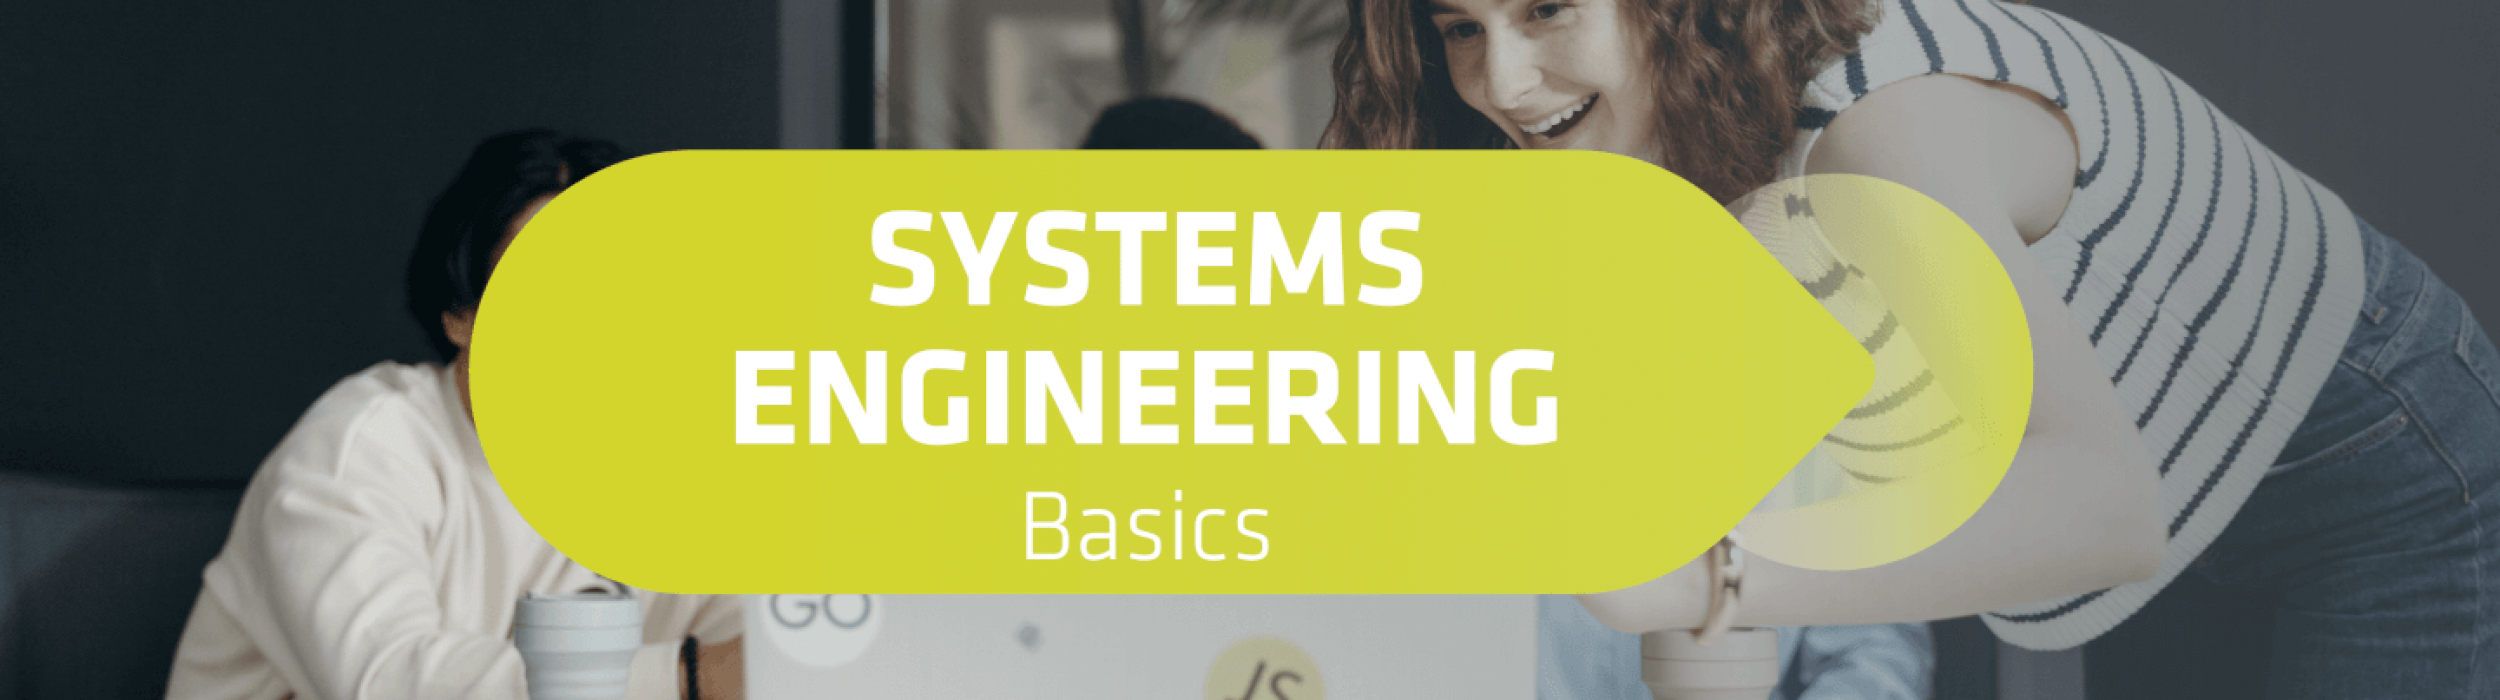 Systems Engineering Basics